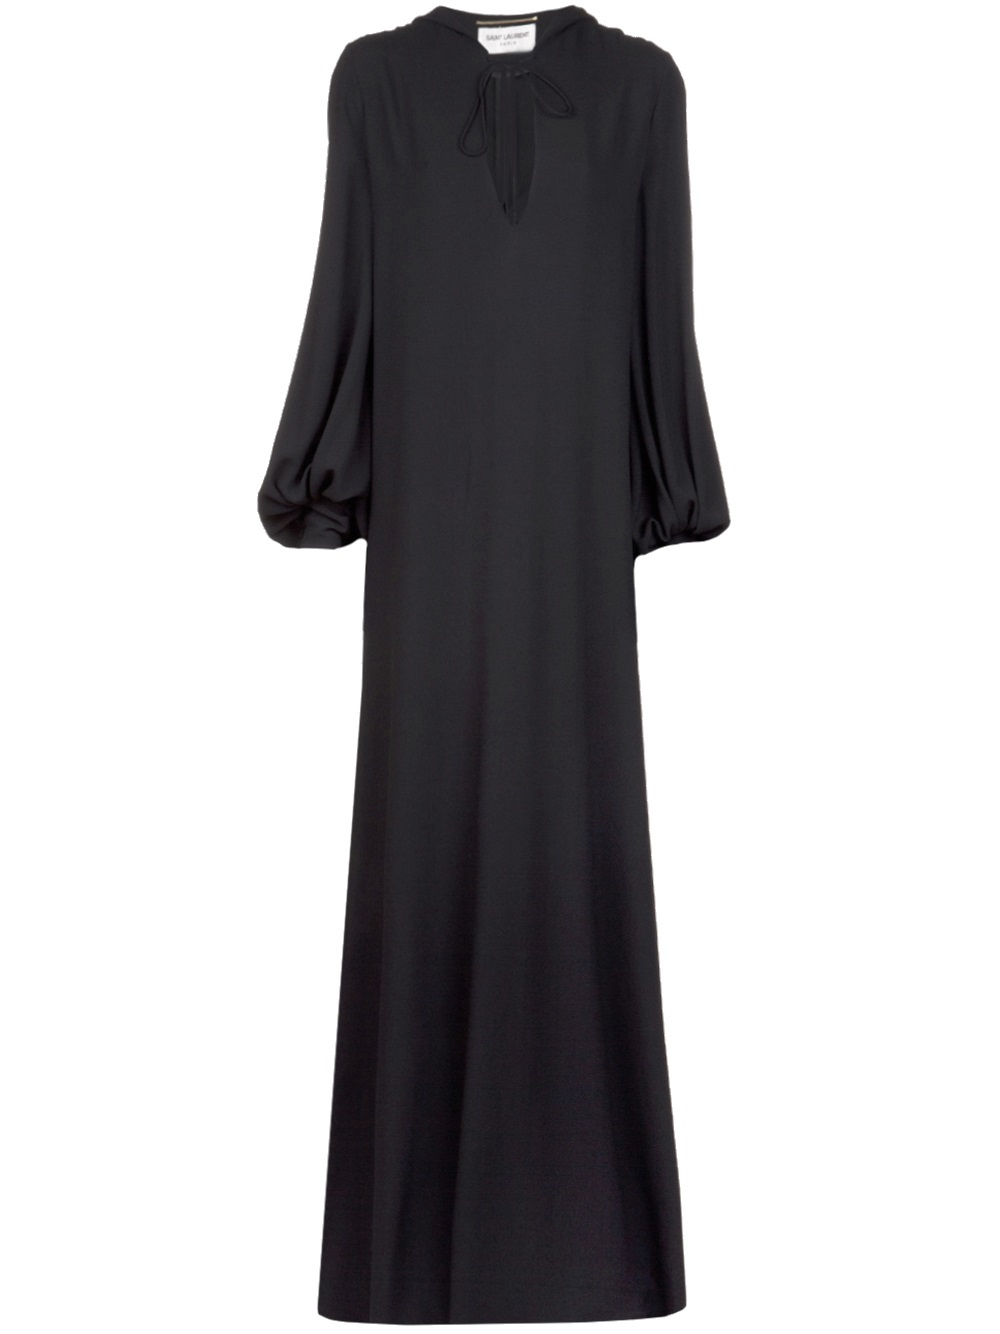 Lyst - Saint Laurent Long Hooded Dress in Black